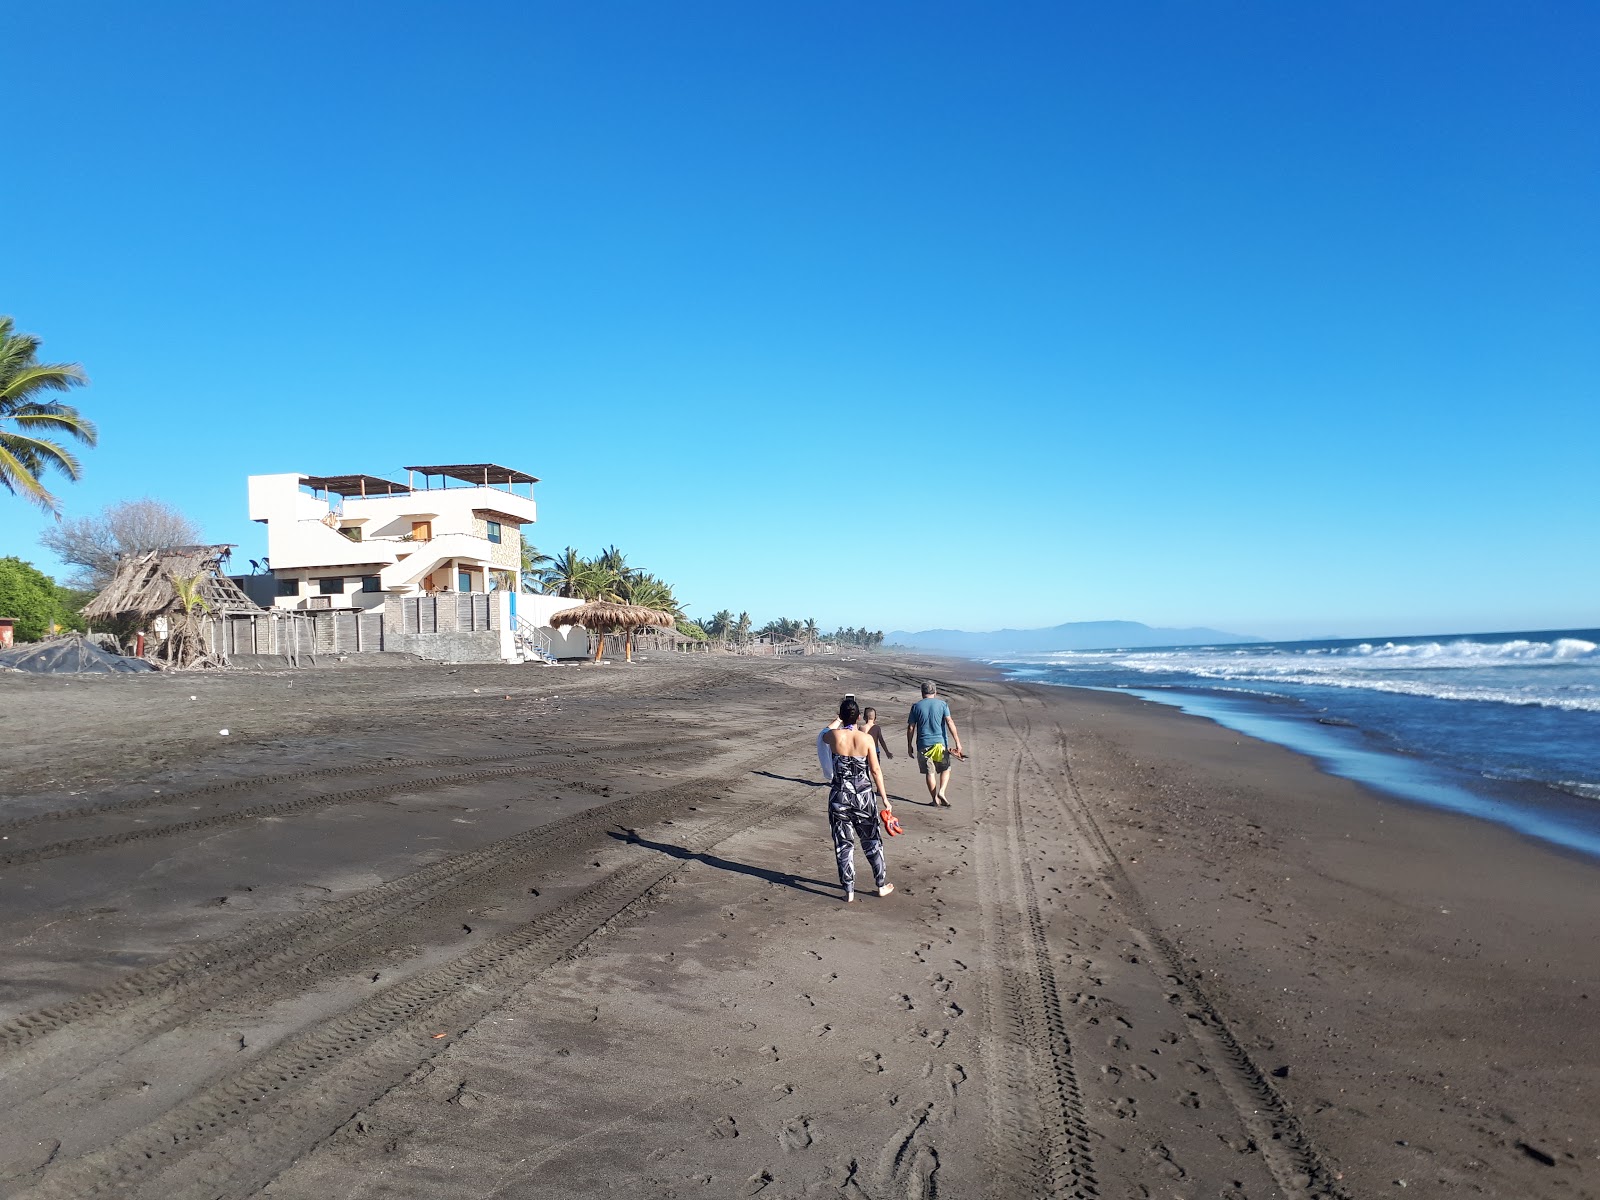 Fotografie cu Playa El Real cu o suprafață de nisip maro